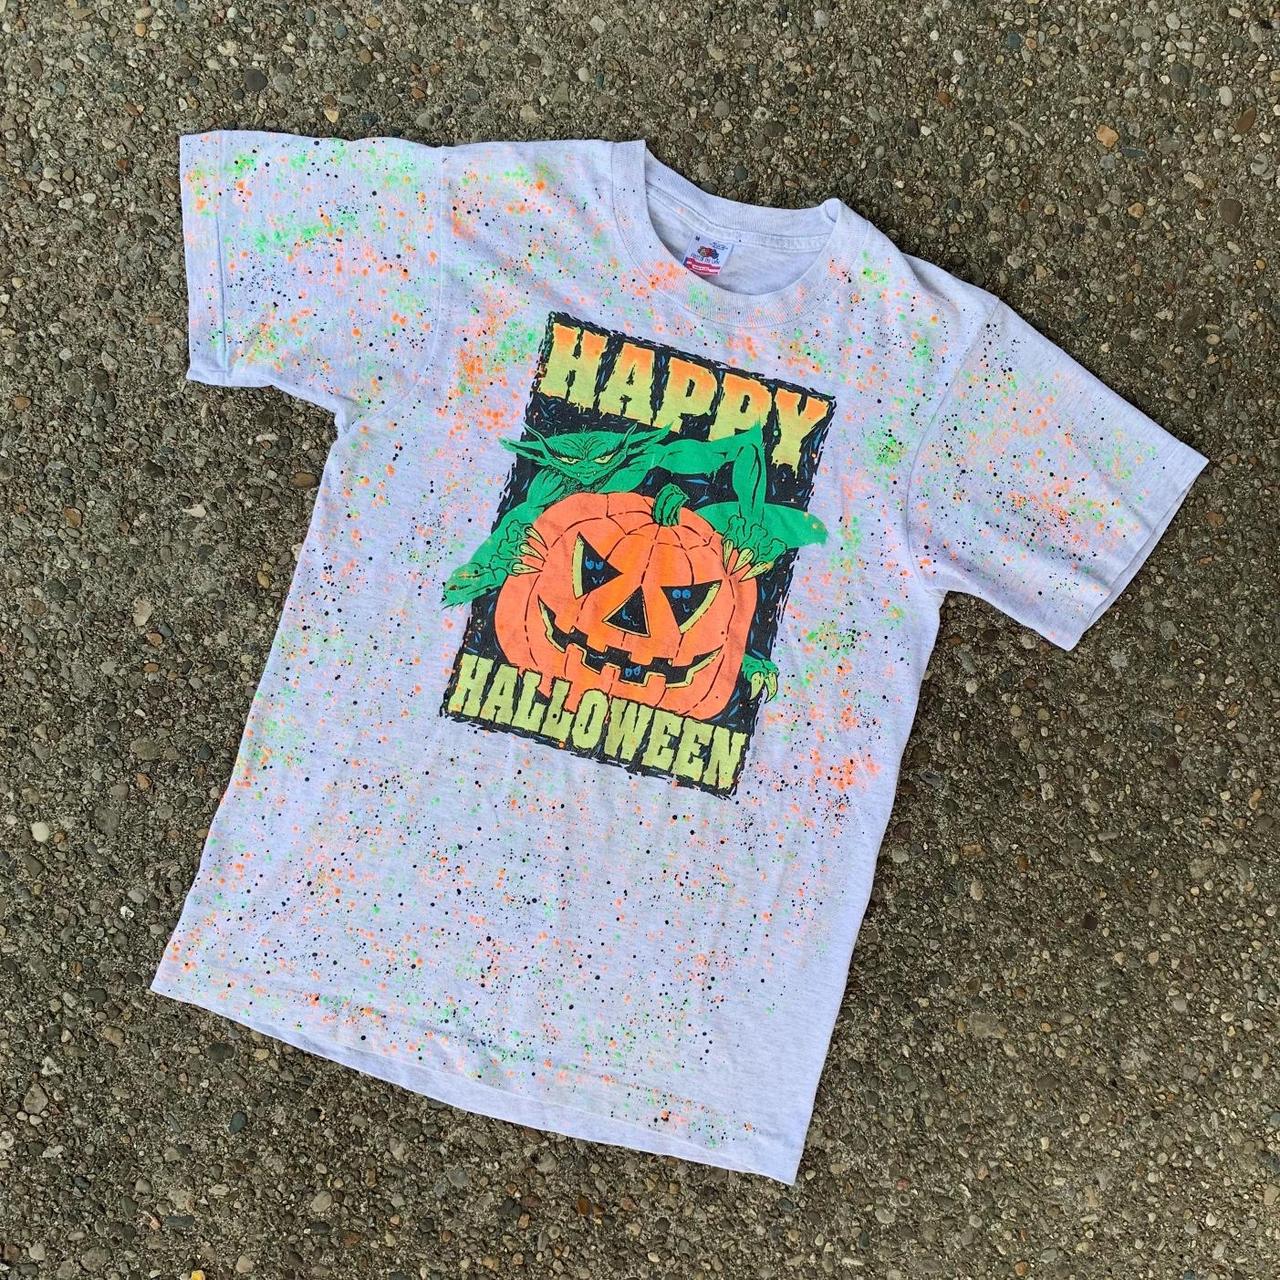 Jack O'Lantern t-shirt by Happy Halloween - Depop